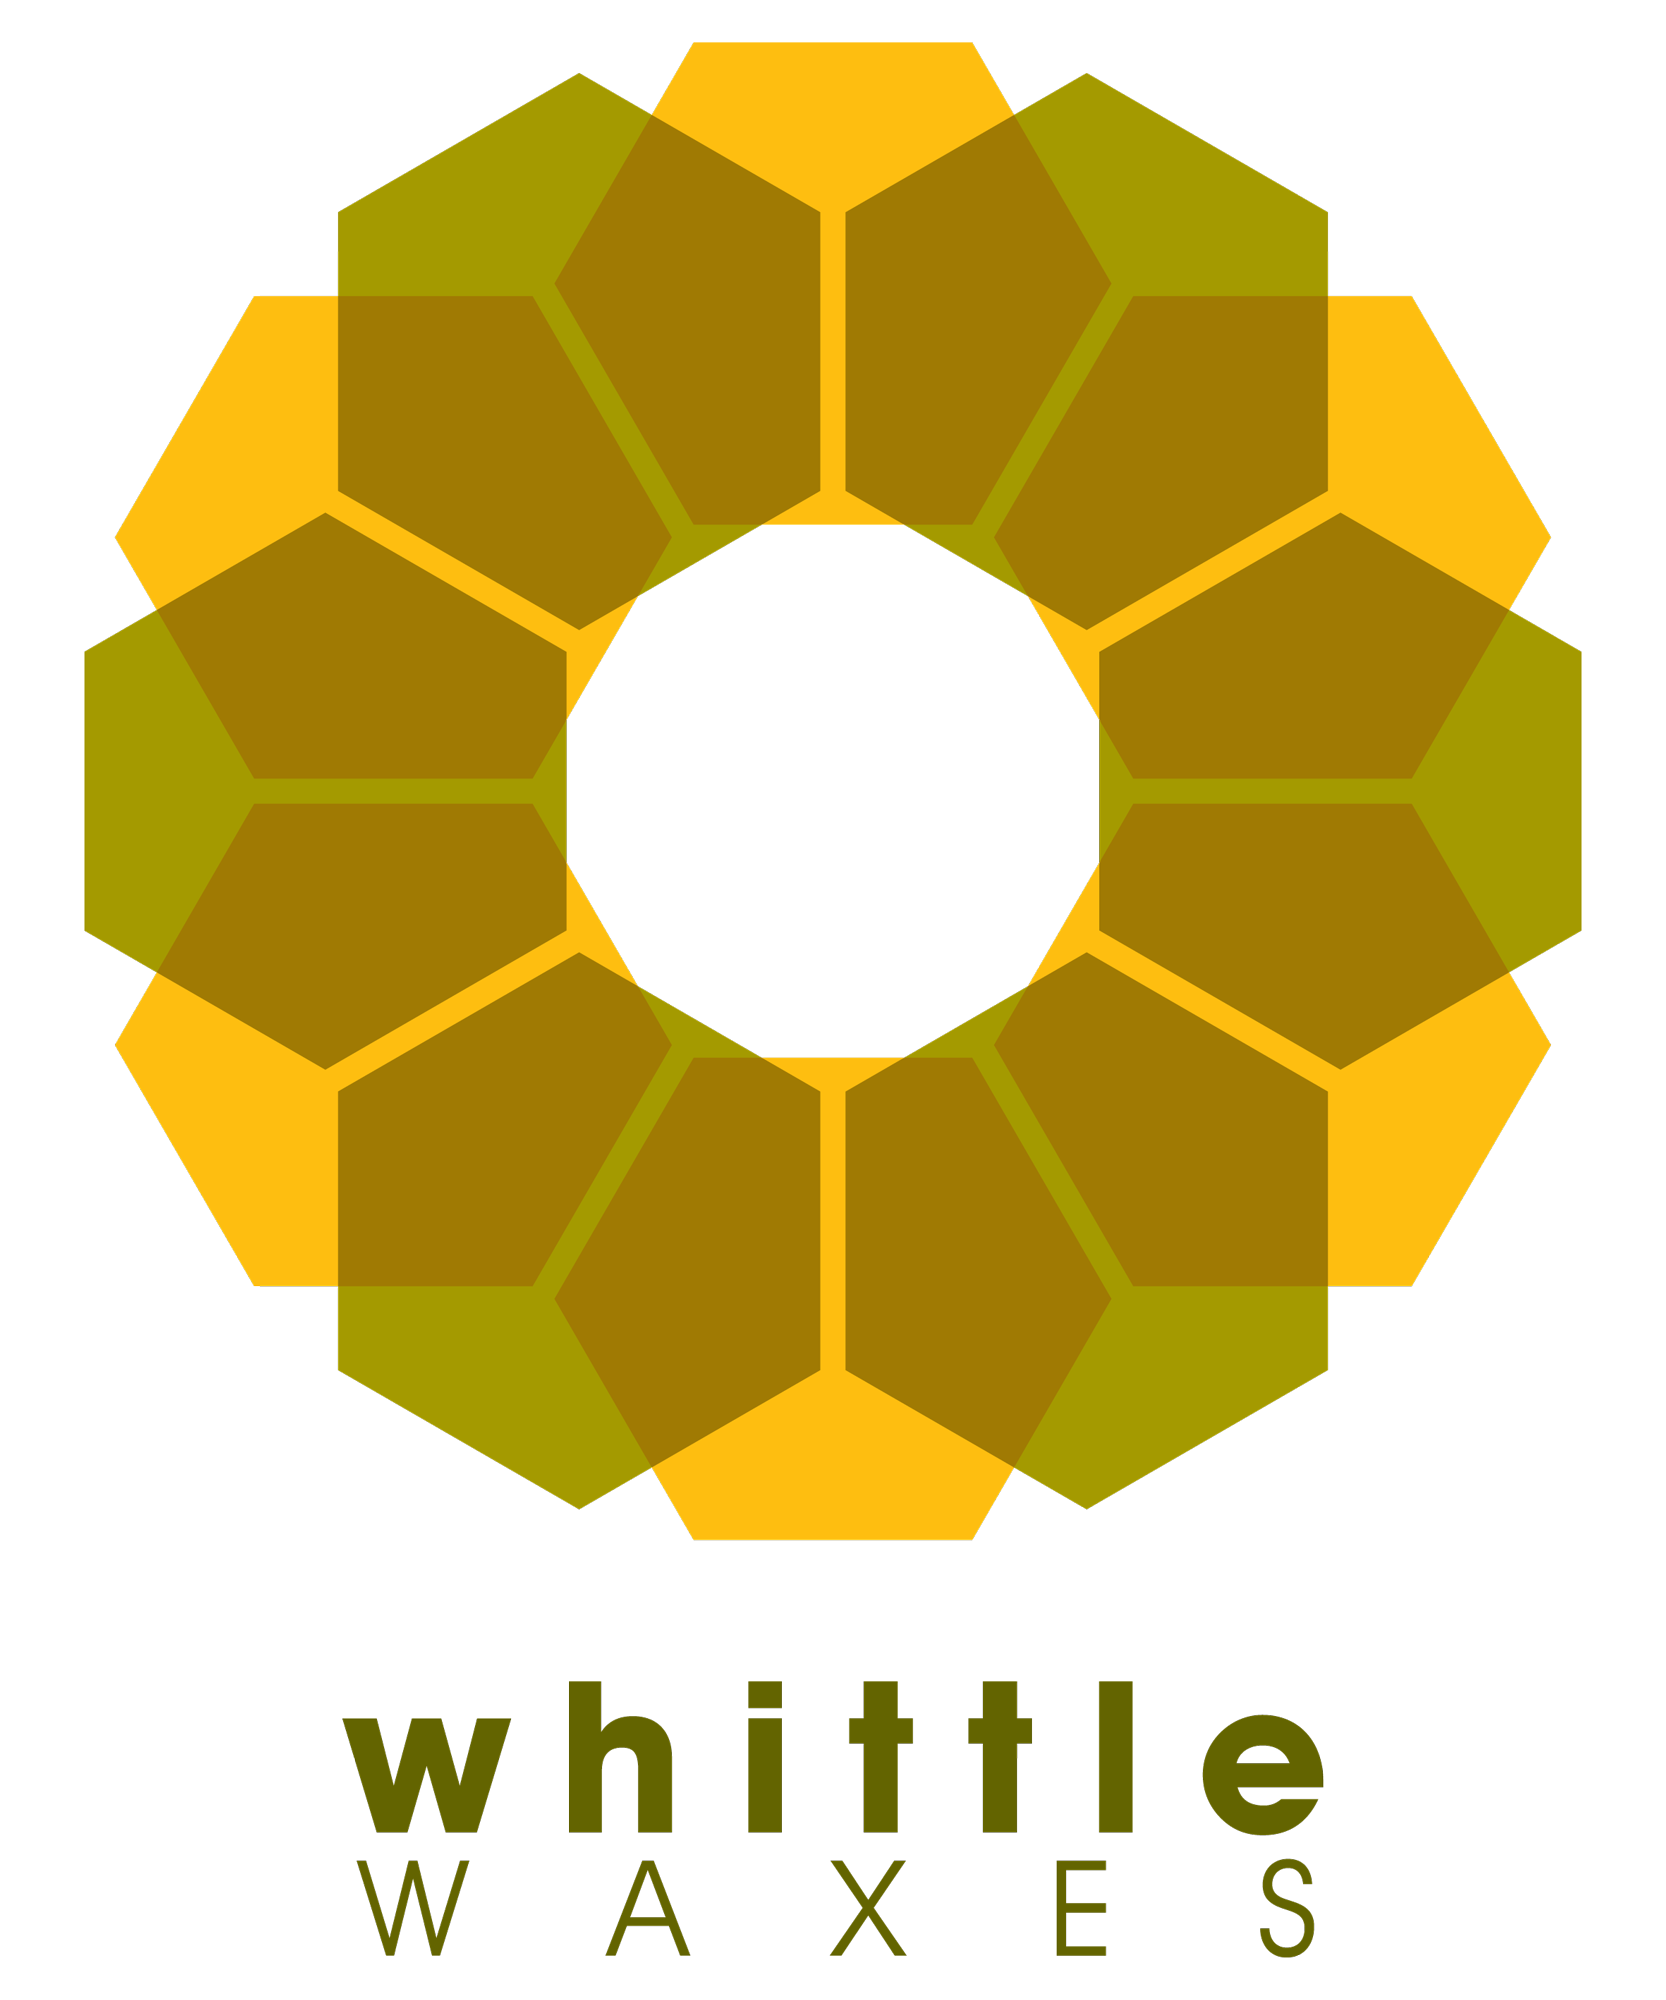 Whittle Waxes